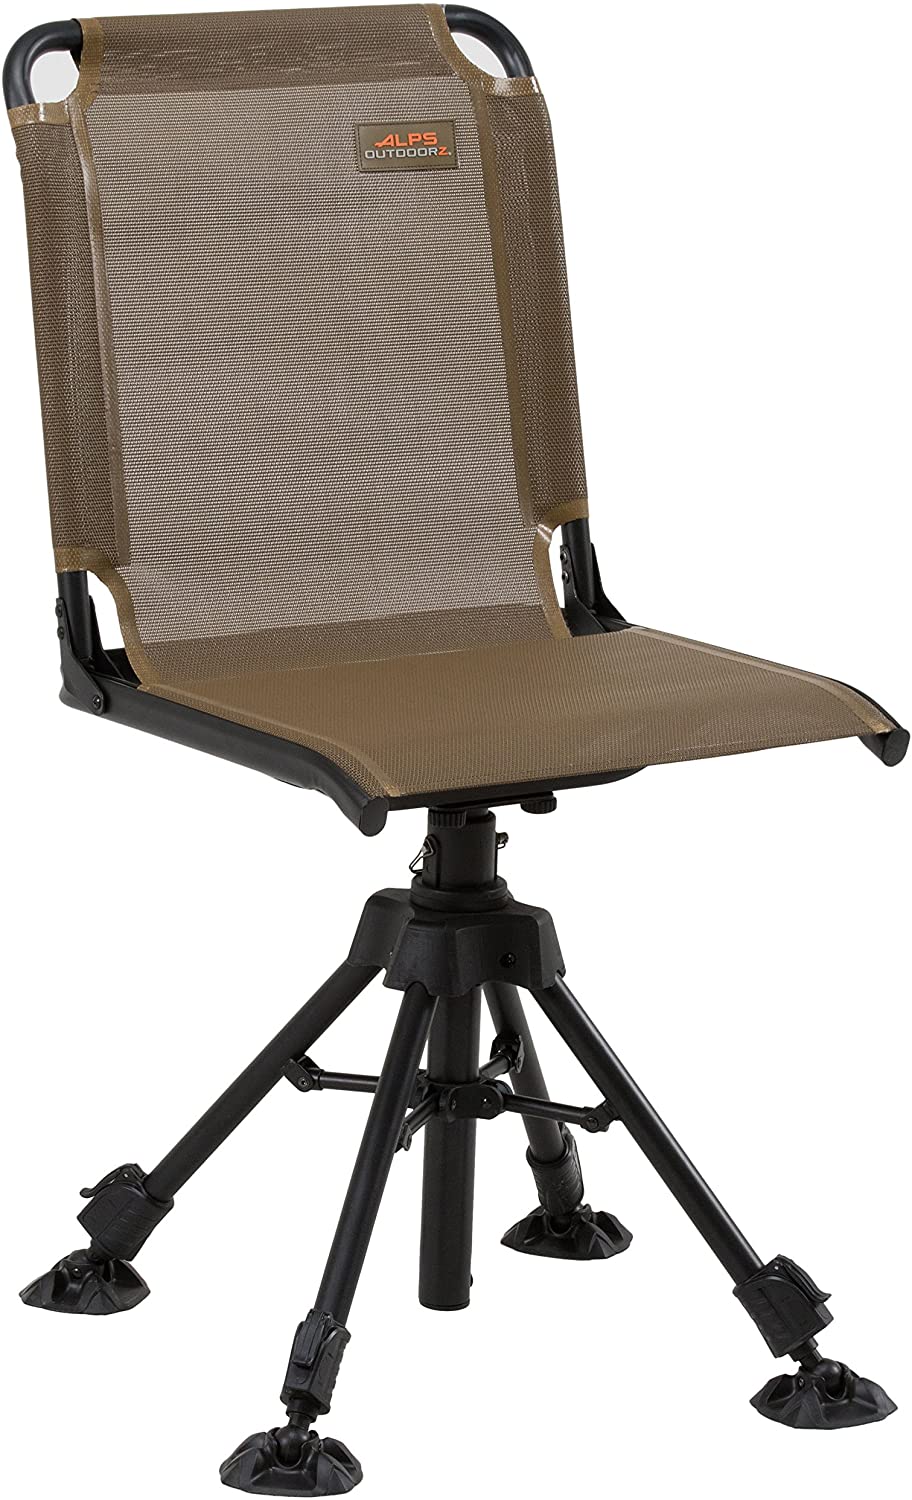 ALPS OutdoorZ Stealth Hunter Blind Chair, Regular - AL8433014